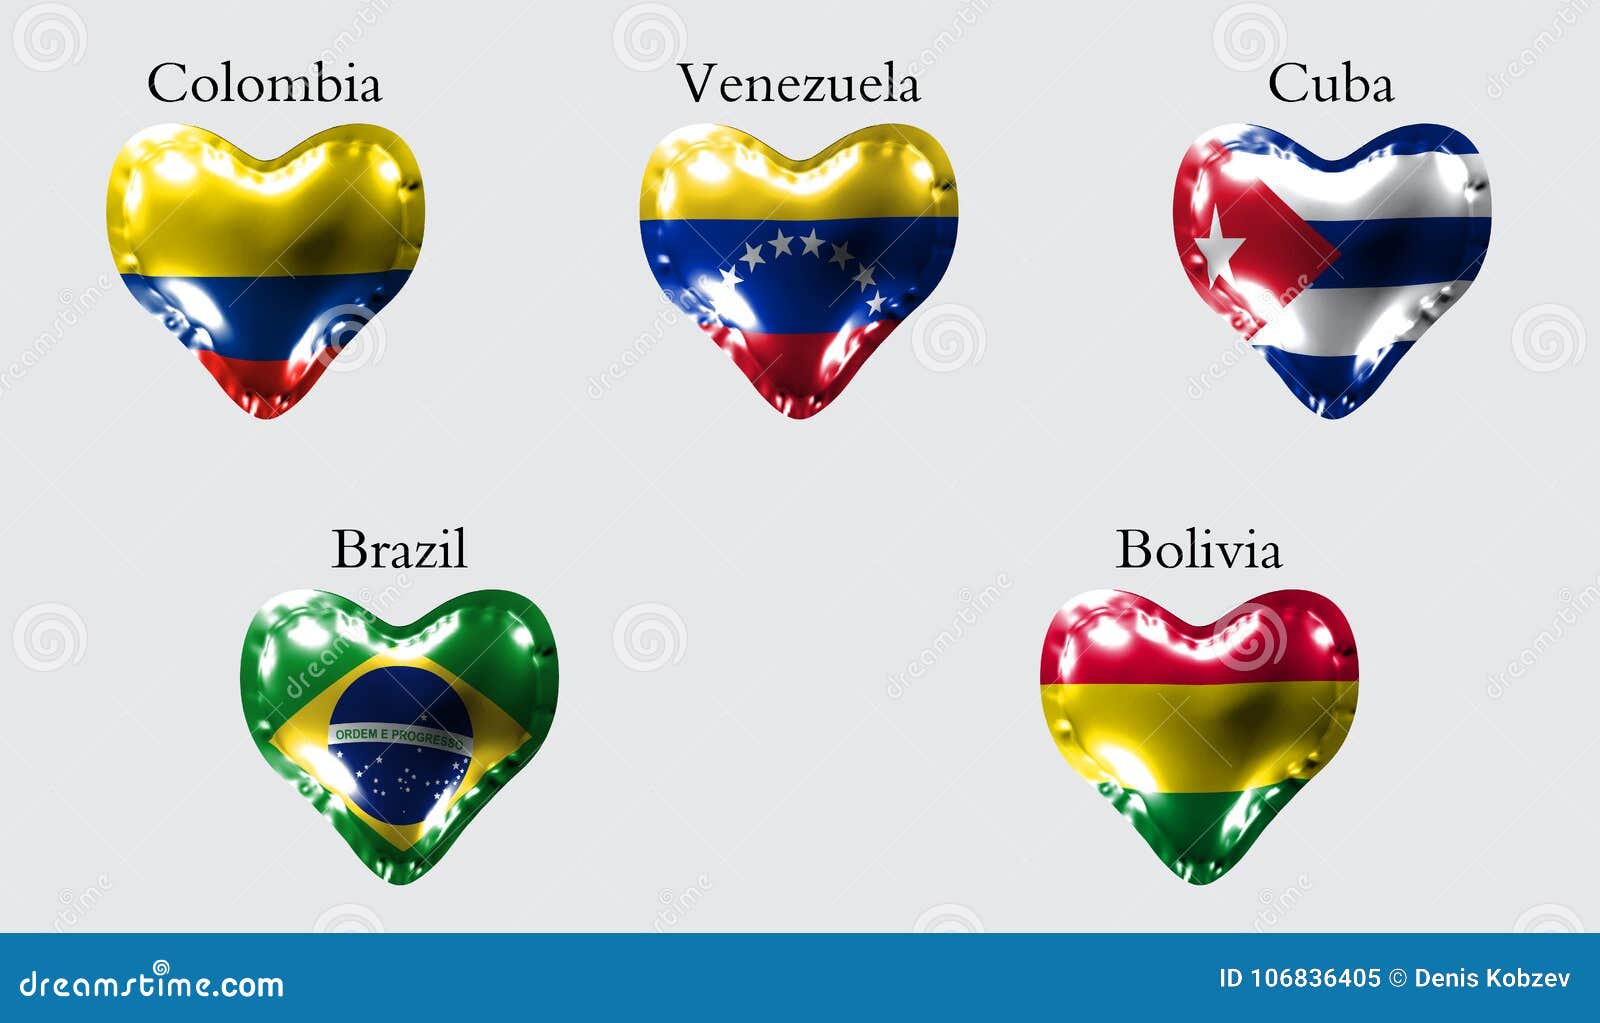 Bandeiras nacionais das américas brasil argentina colômbia equador  venezuela uruguai cuba